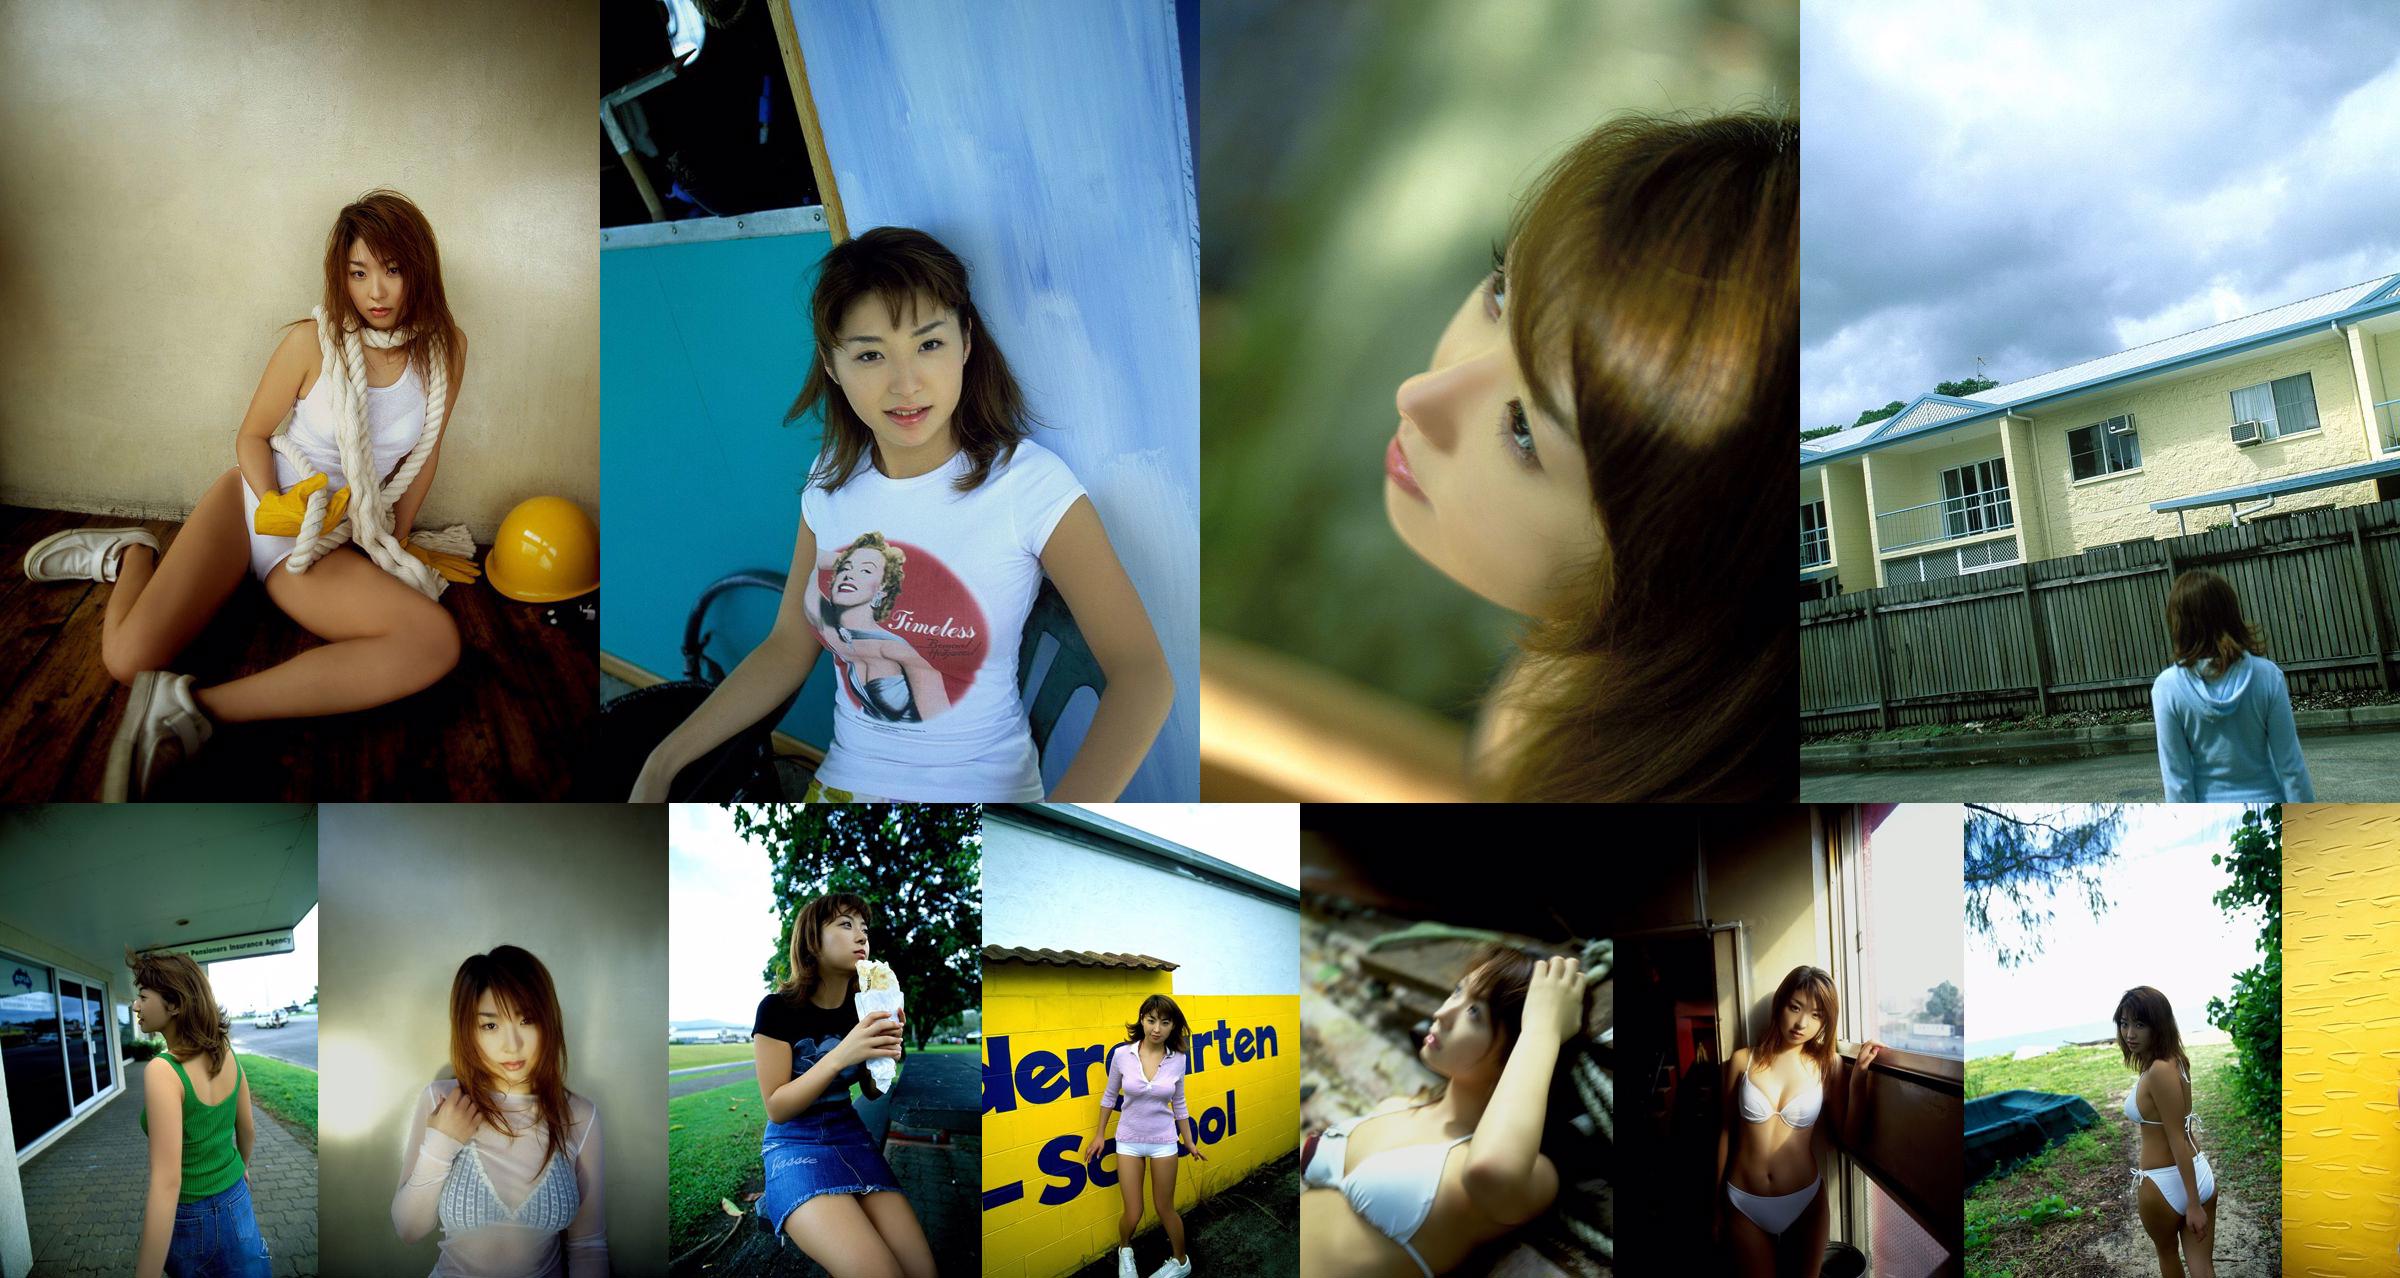 Mayu Watanabe Suzuran Yamauchi [Salto Joven Semanal] 2011 Revista fotográfica No 27 No.187a02 Página 1